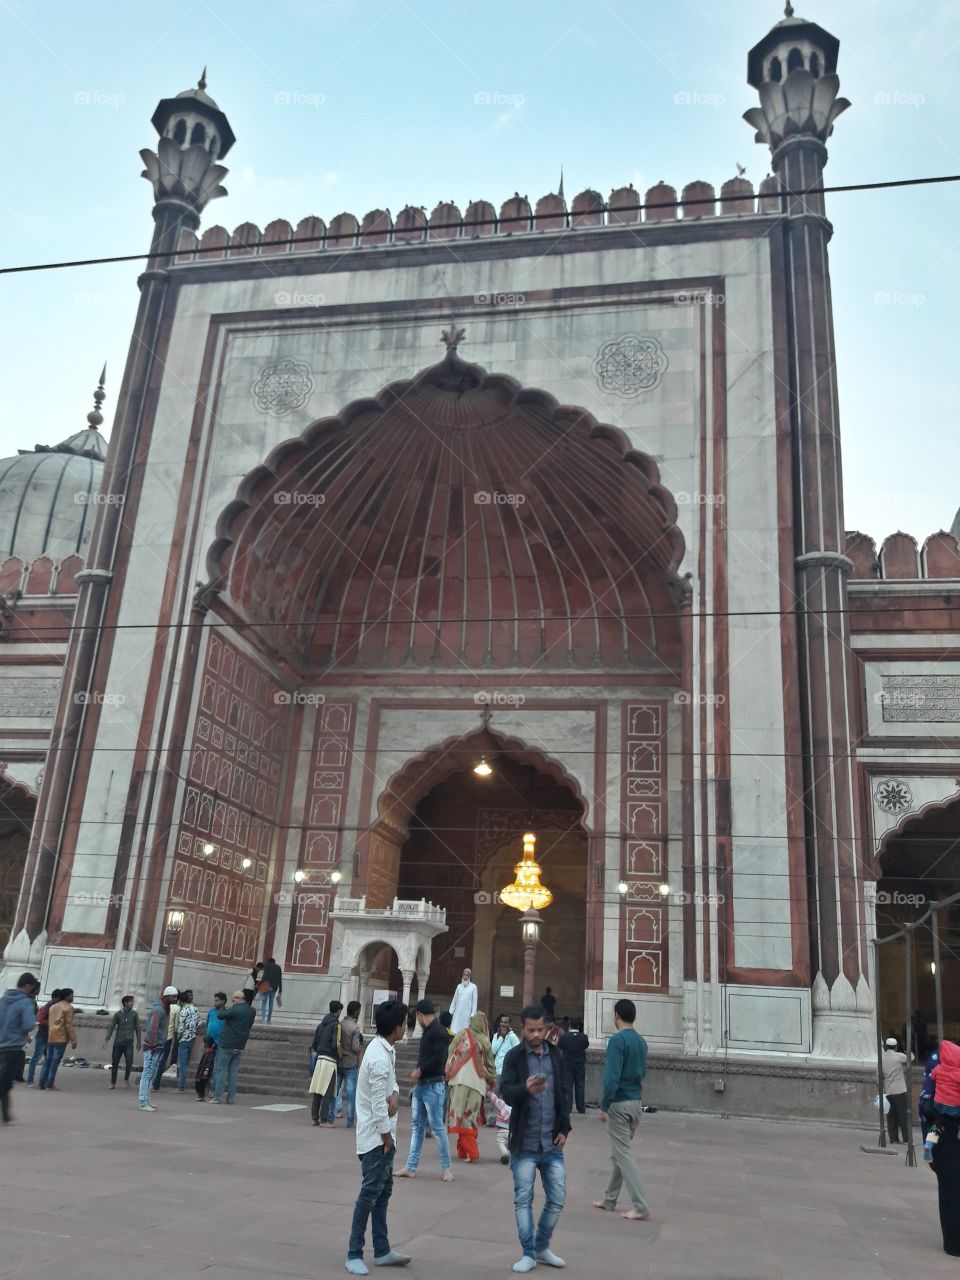 jama masjid delhi